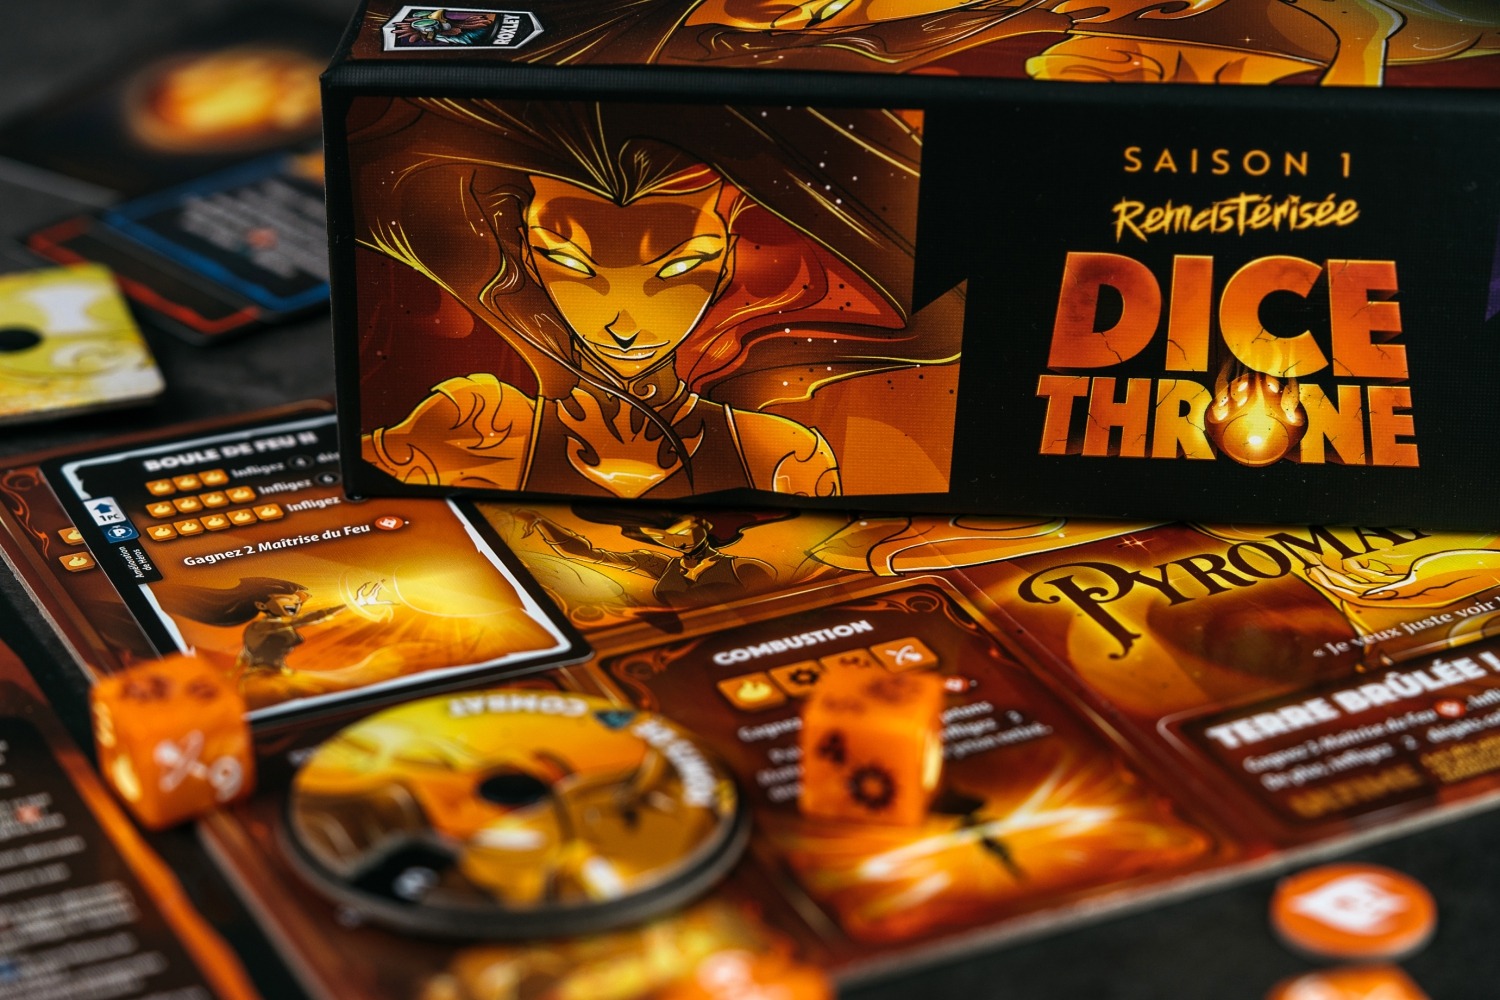 Dice throne saison 1 lucky duck games boardgame photo jeu de société pyromancienne